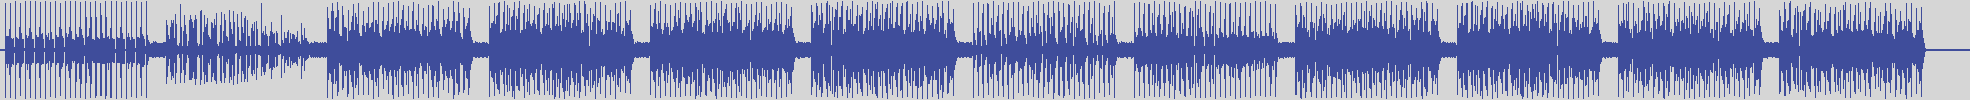 nf_boyz_records [NFY062] Sunrise Santorini - Blond Dream [Natural Deep Mix] audio wave form